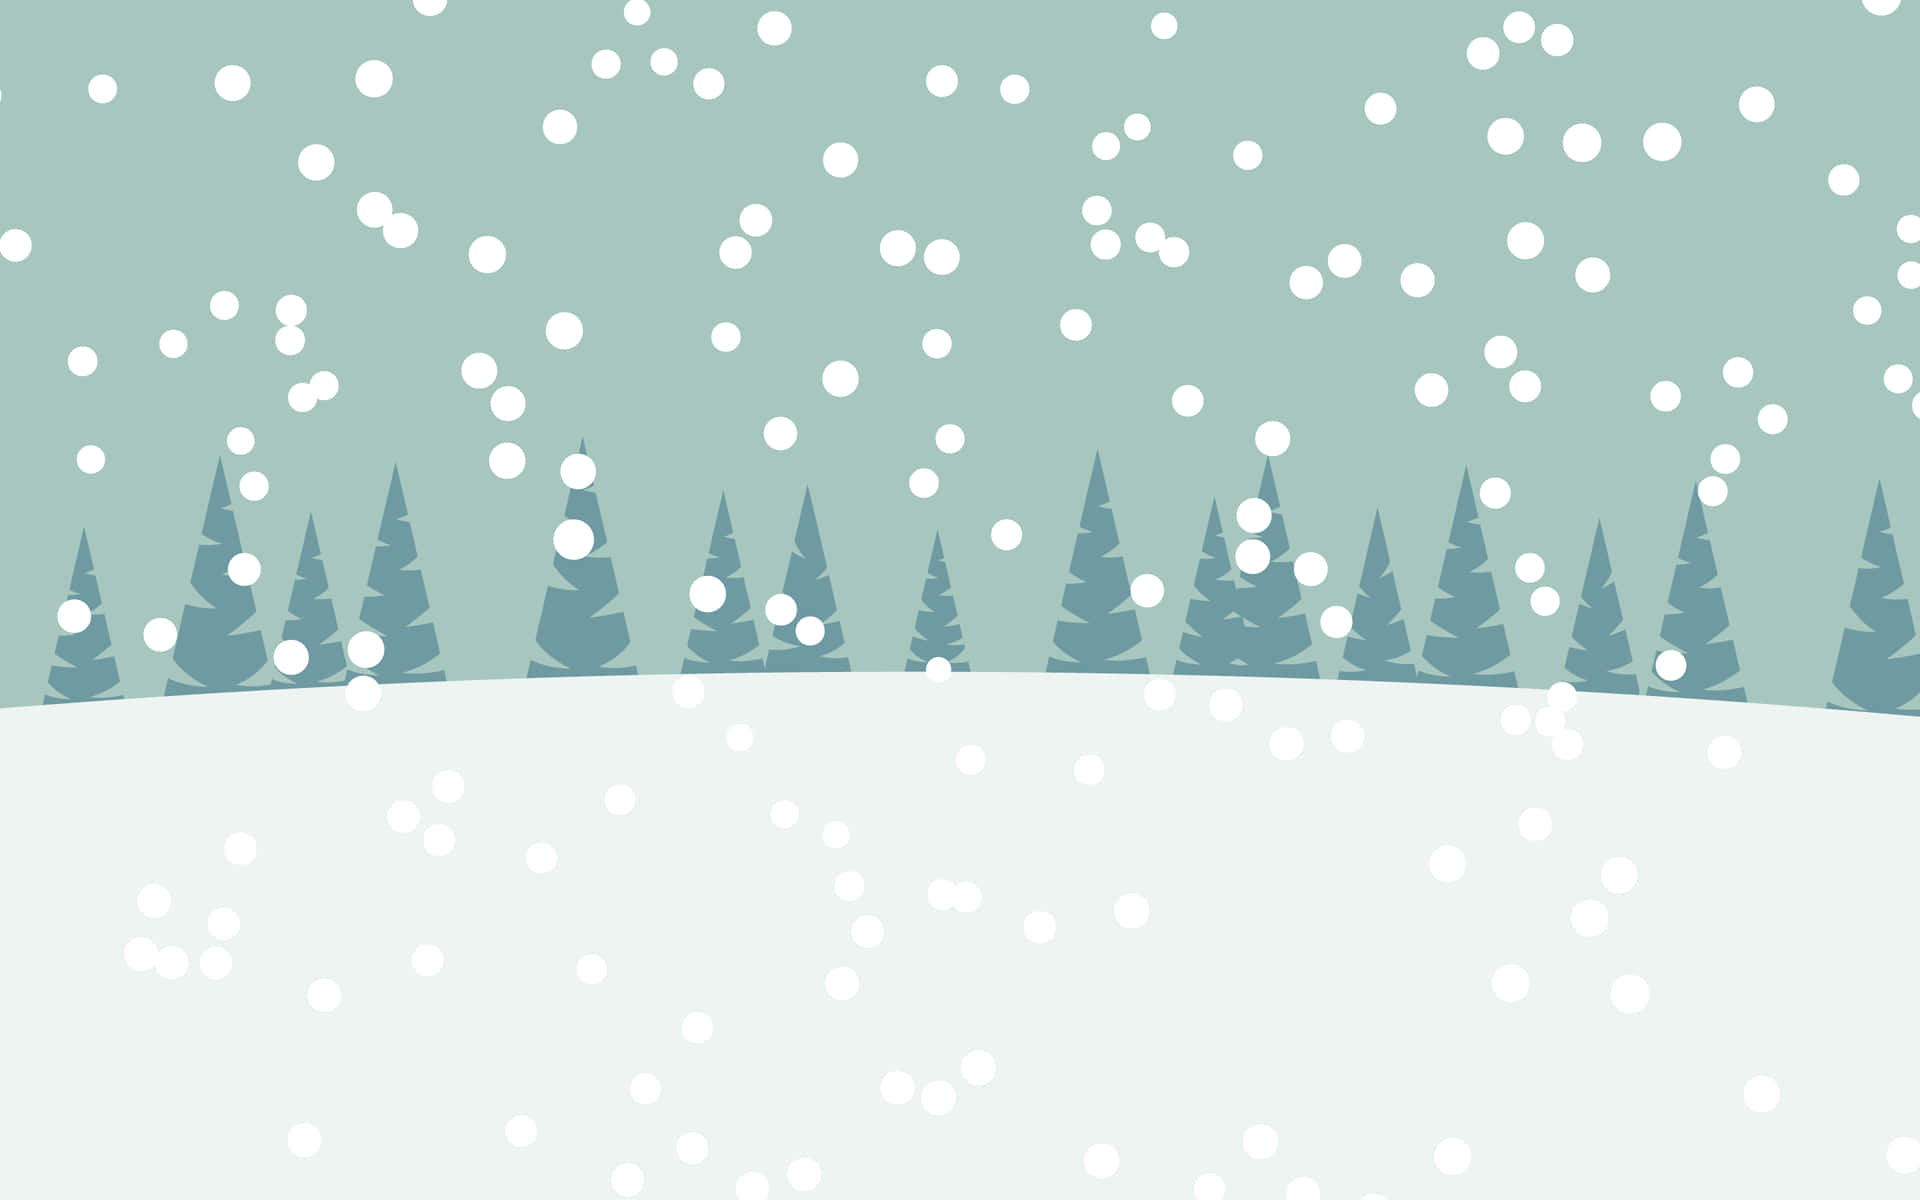 Enjoy a Cozy Minimalist Winter Wallpaper